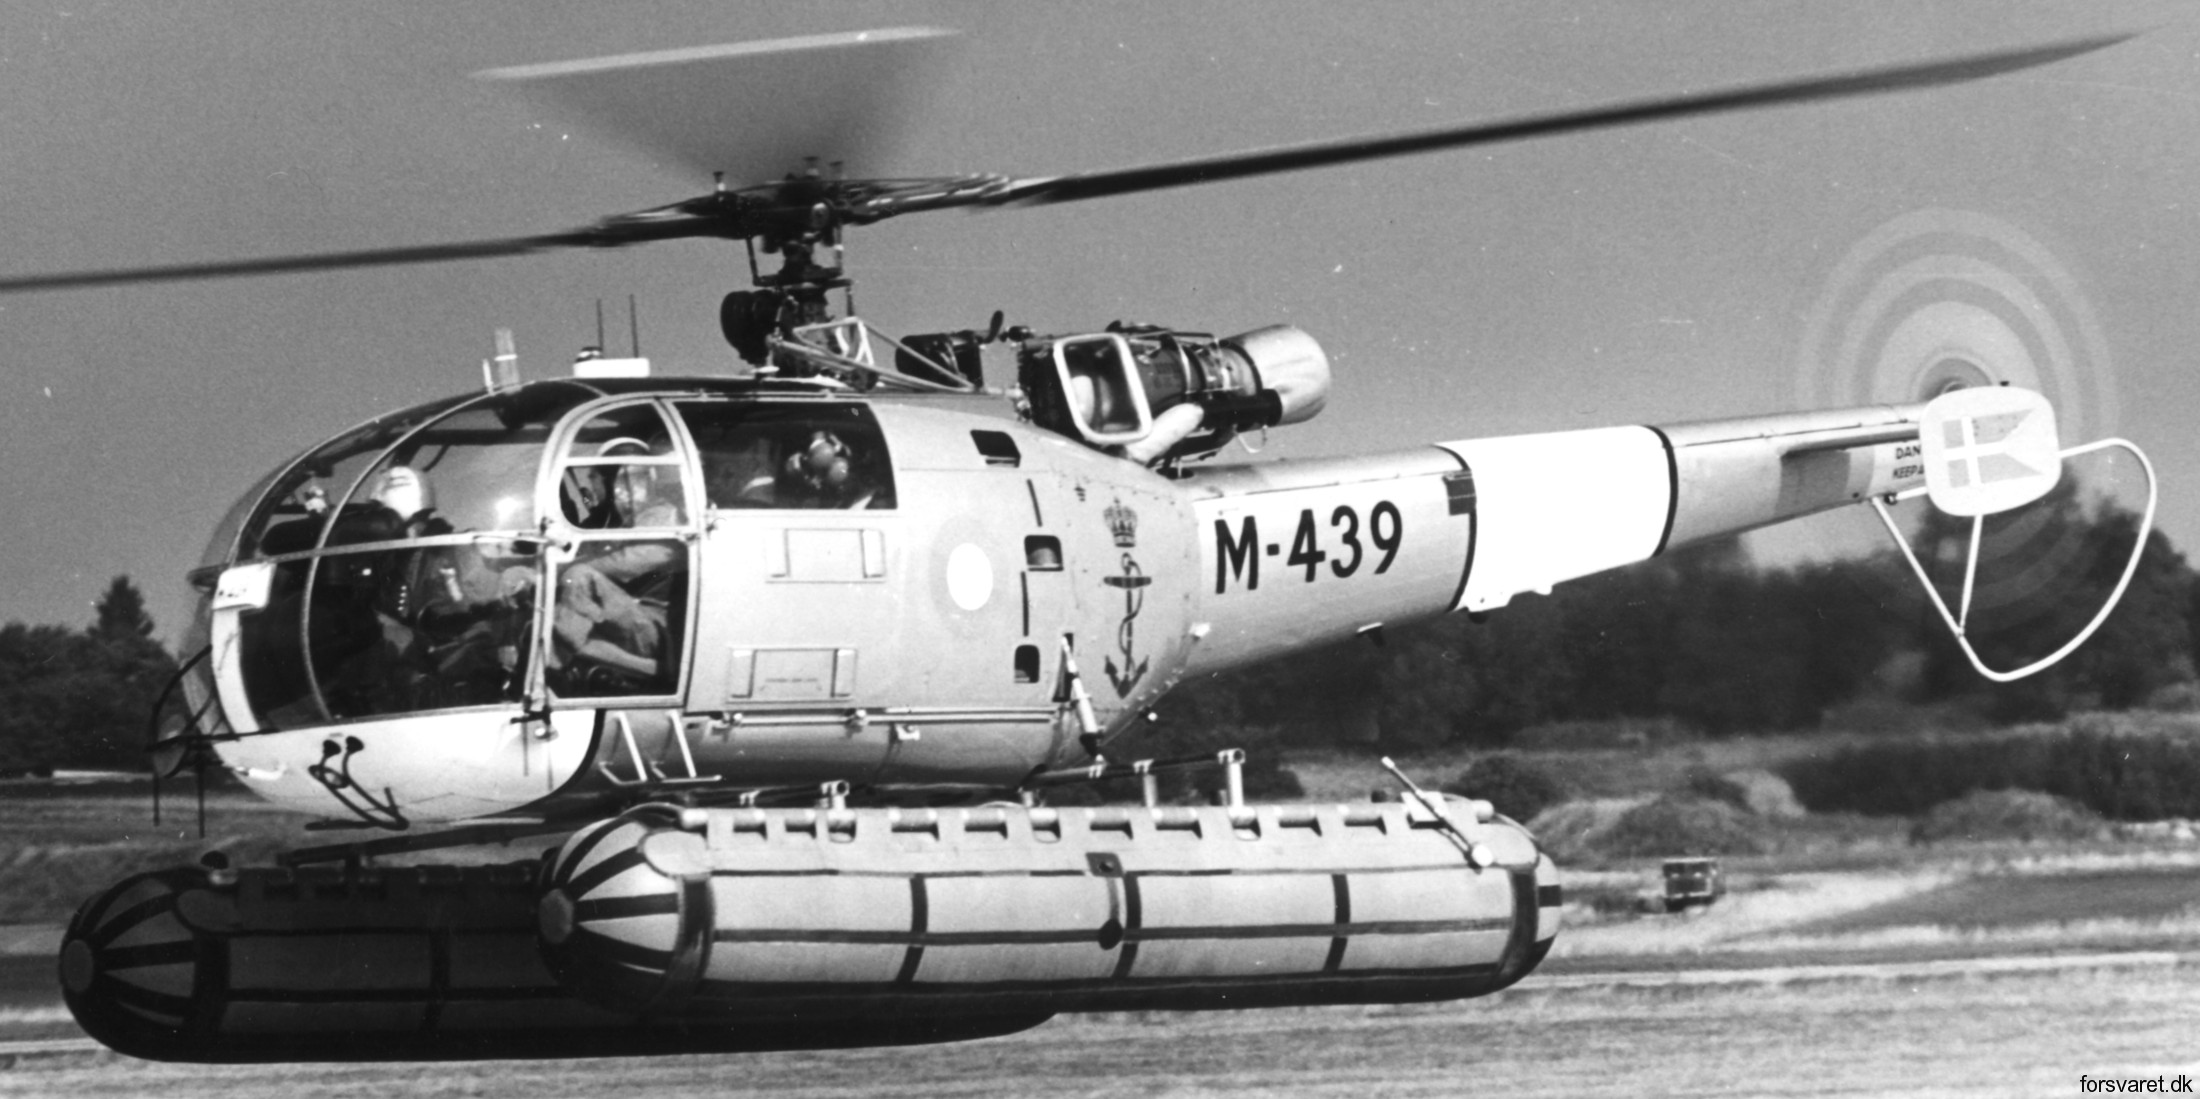 sa 316b alouette iii helicopter royal danish navy søværnet kongelige danske marine sud aviation m-439 09